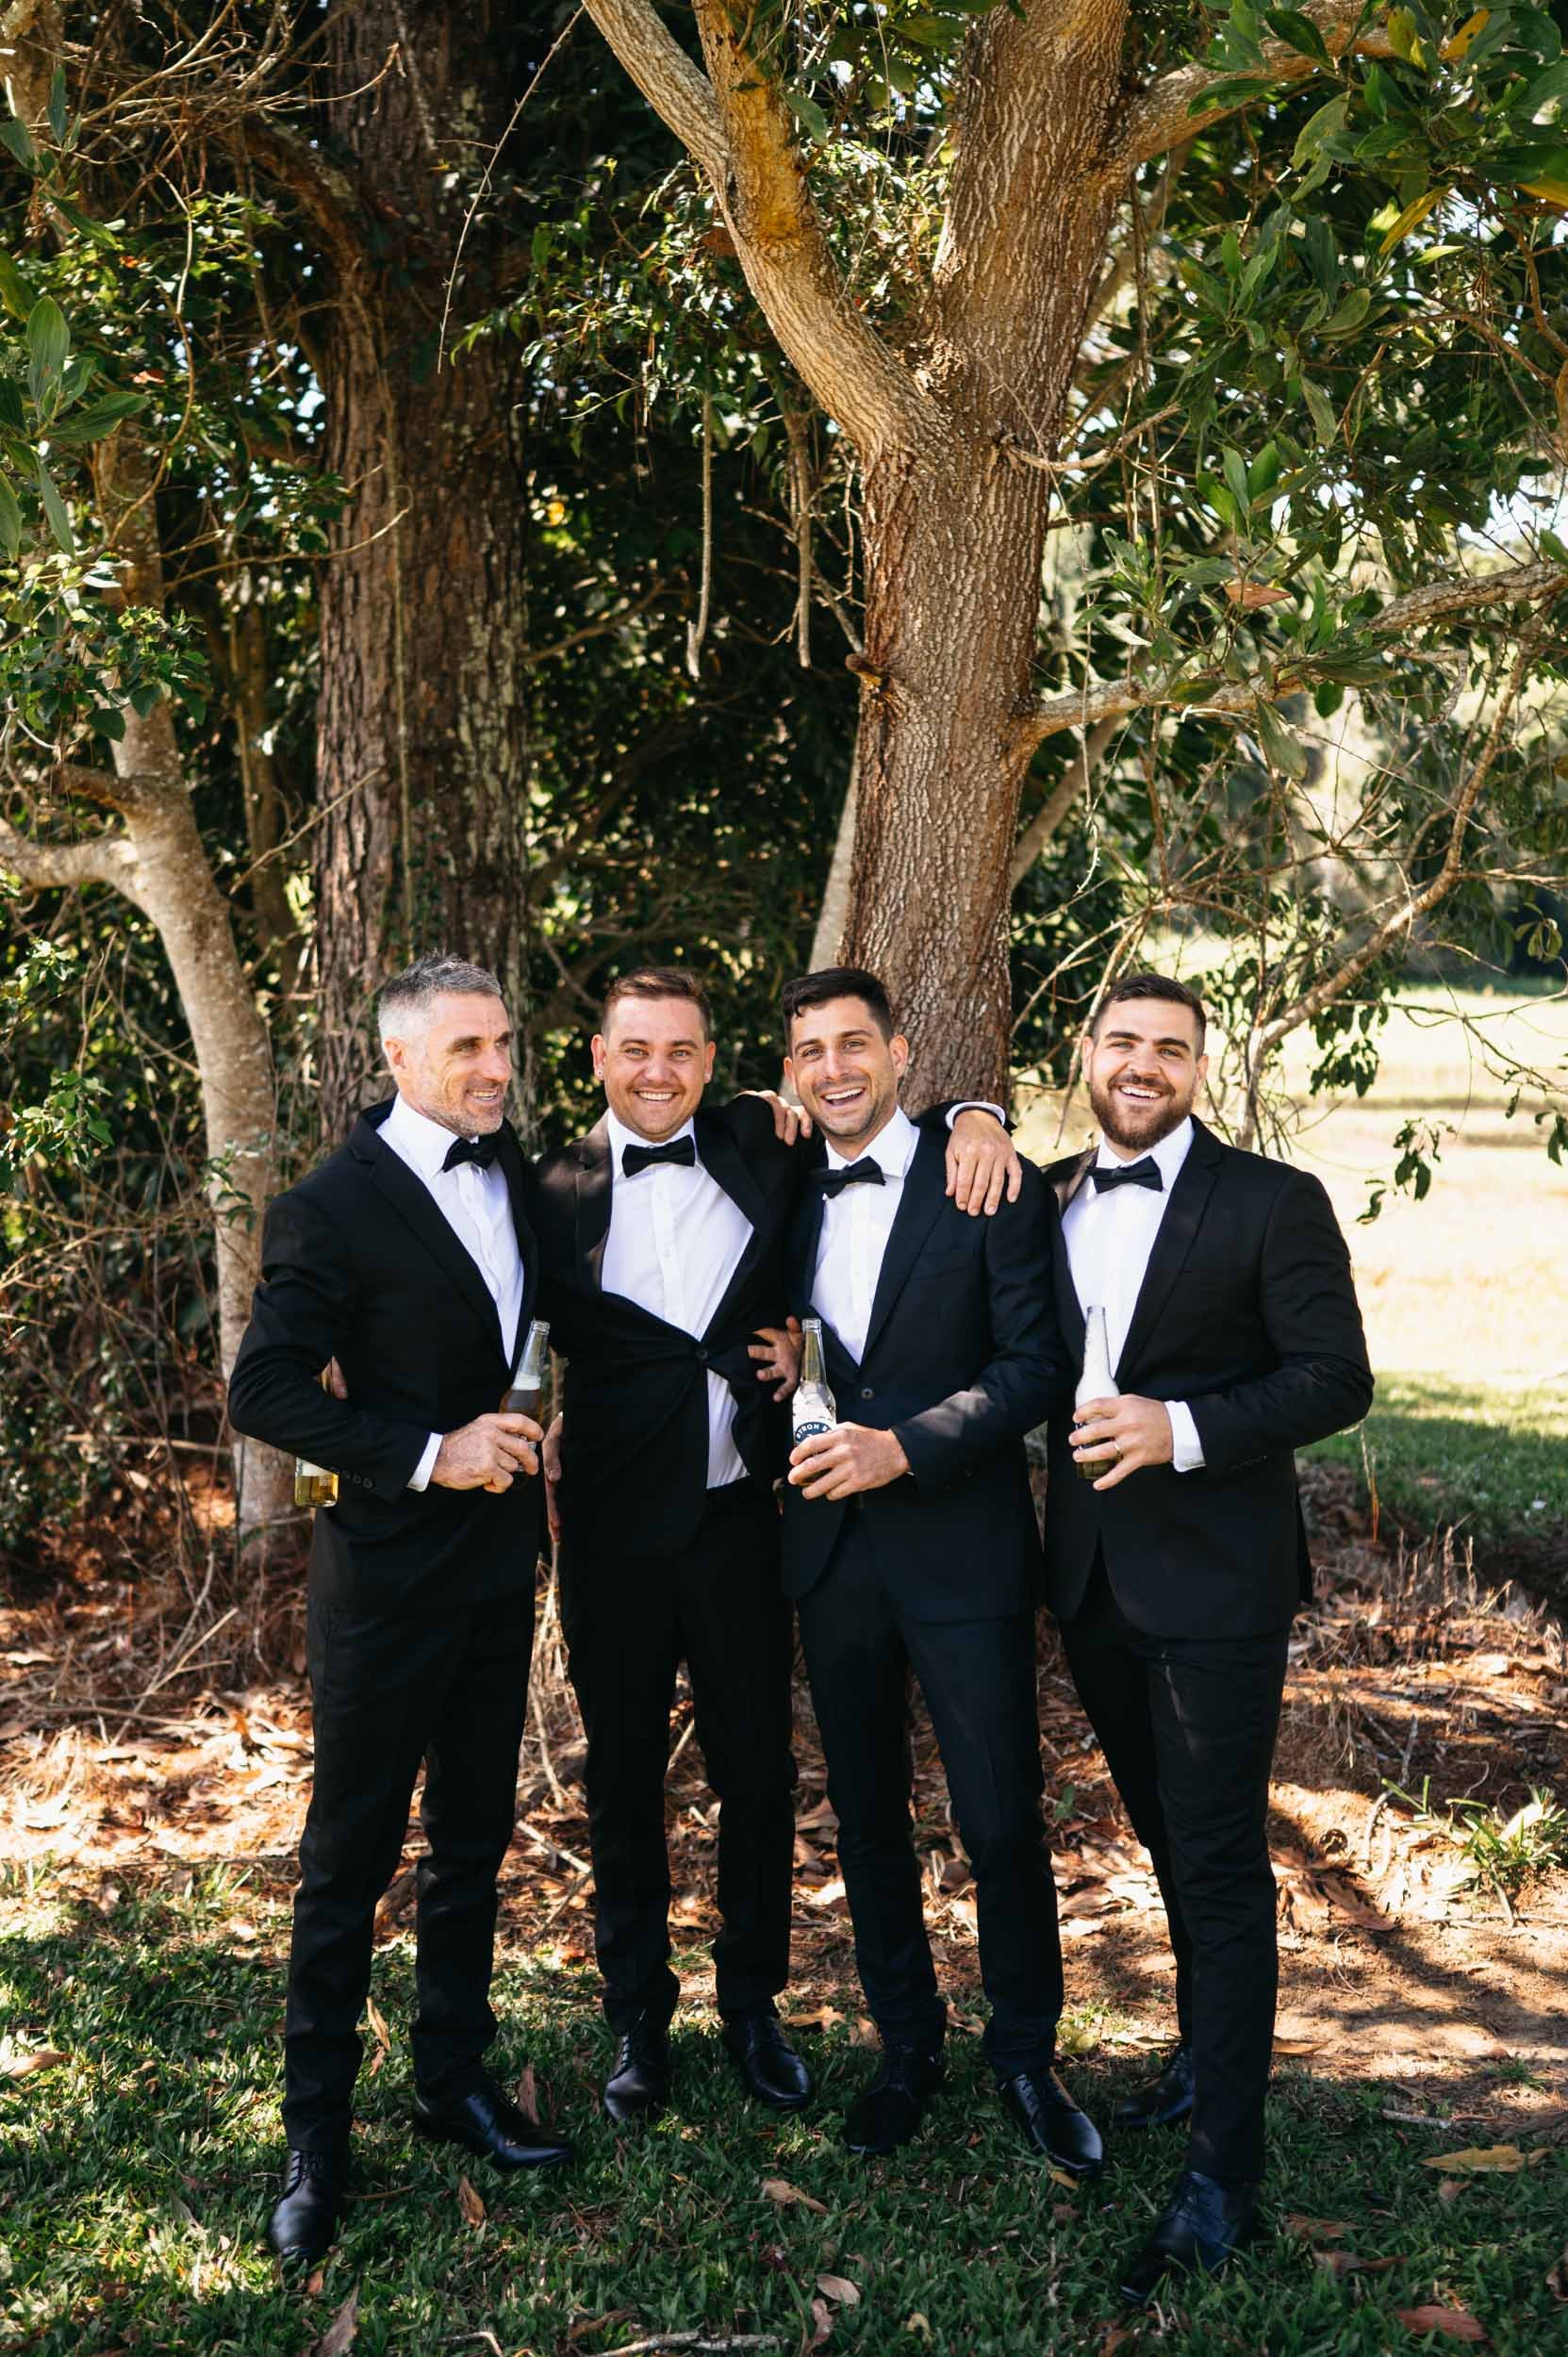 The Raw Photographer - Cairns Wedding Photographer - Mareeba Tablelands - Queensland photography - Kyha dress - luxury-7.jpg